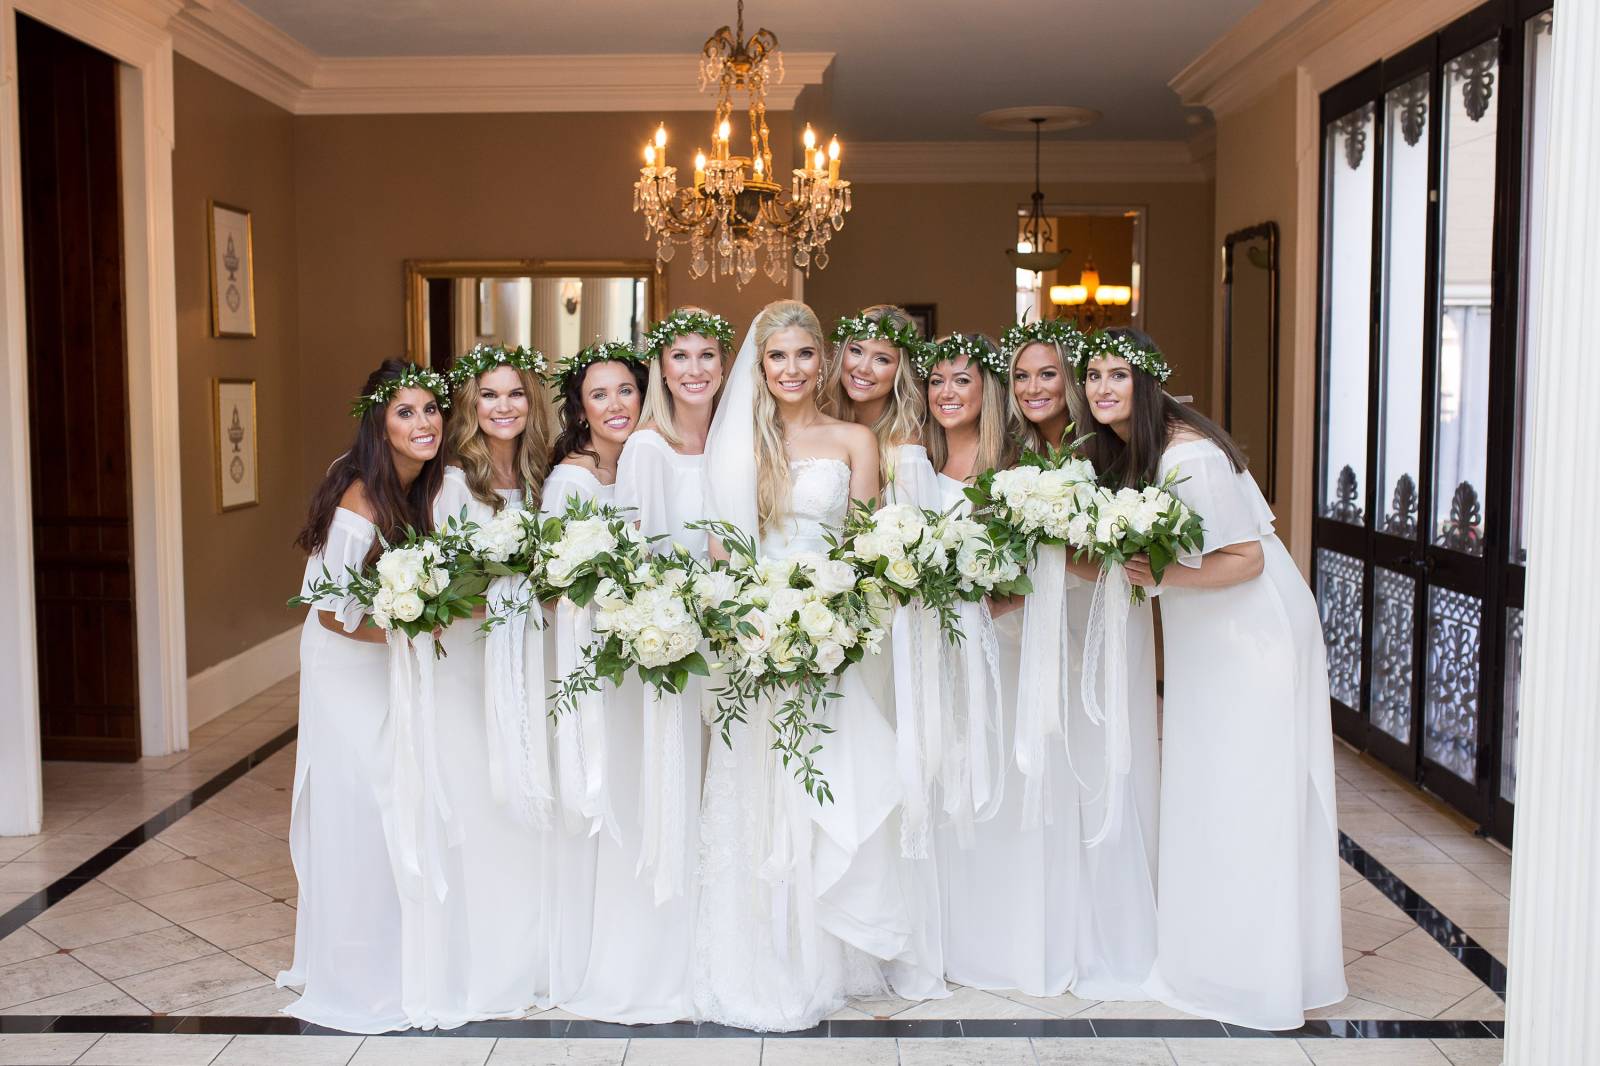 Melissa Marie Floral Design – A Nashville Florist for All Your Wedding Needs |  Nashville Floral & Centerpiece